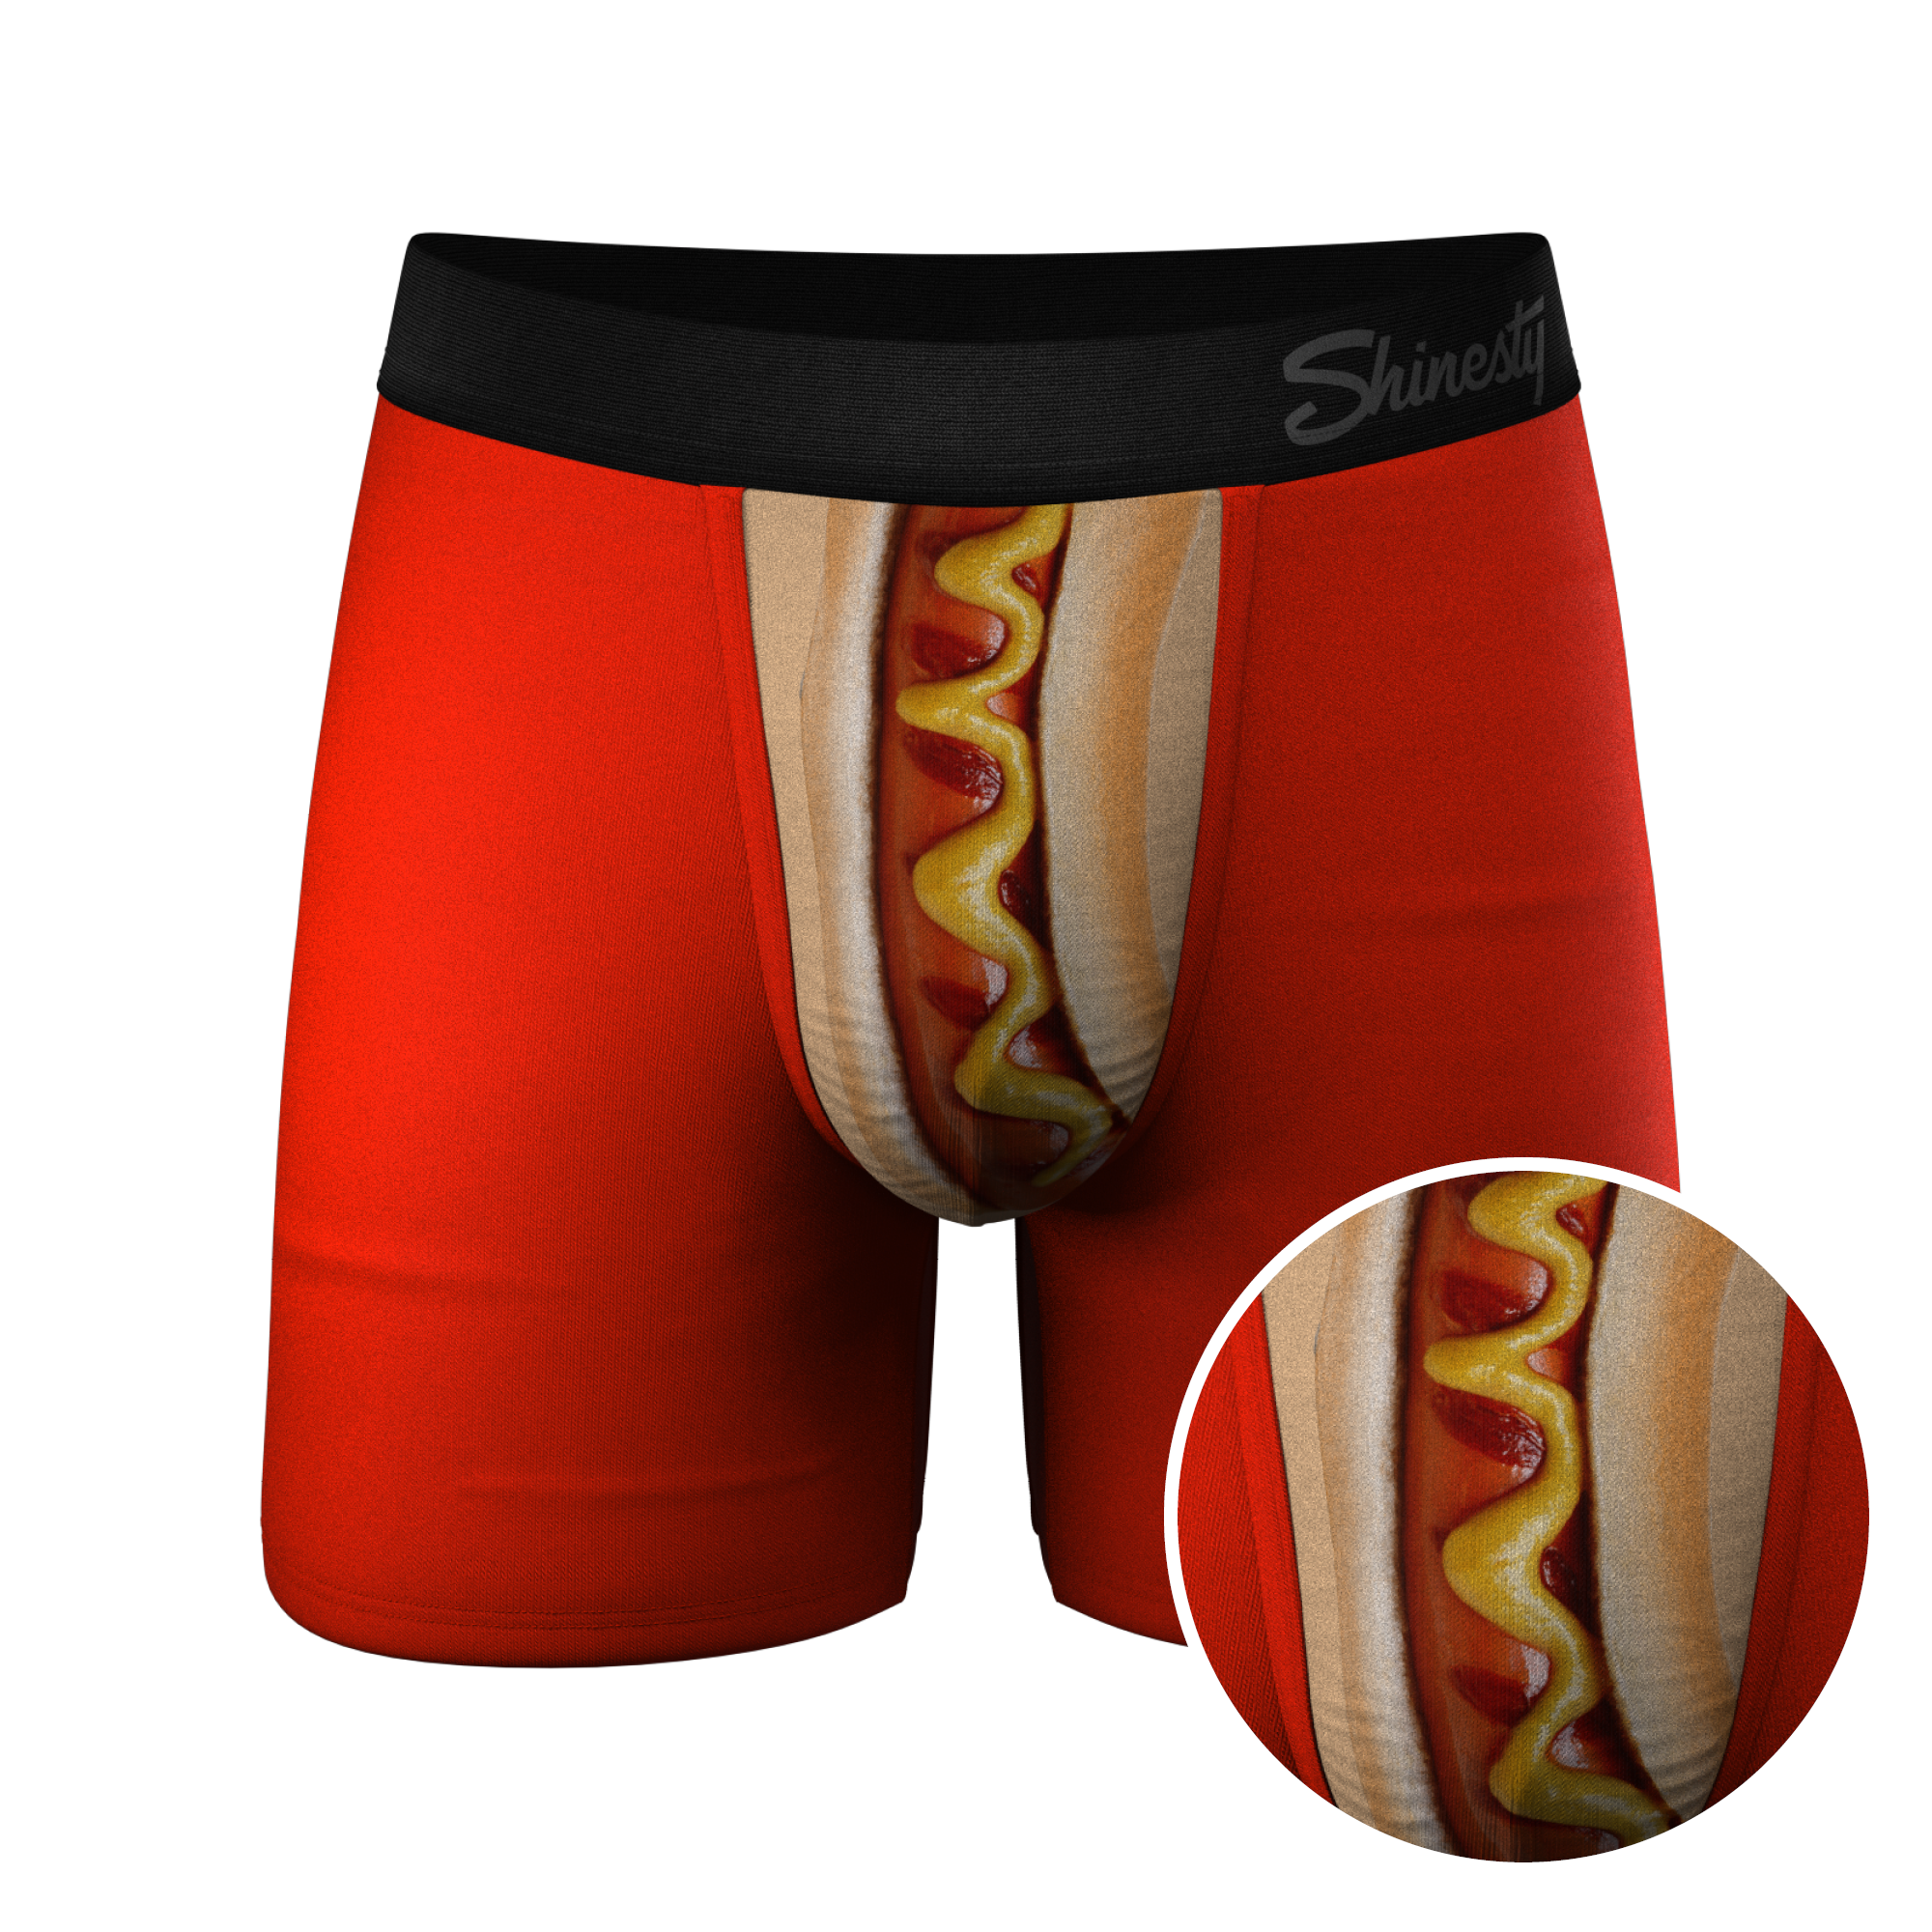 Hot Dog Ball Hammock® Pouch Underwear